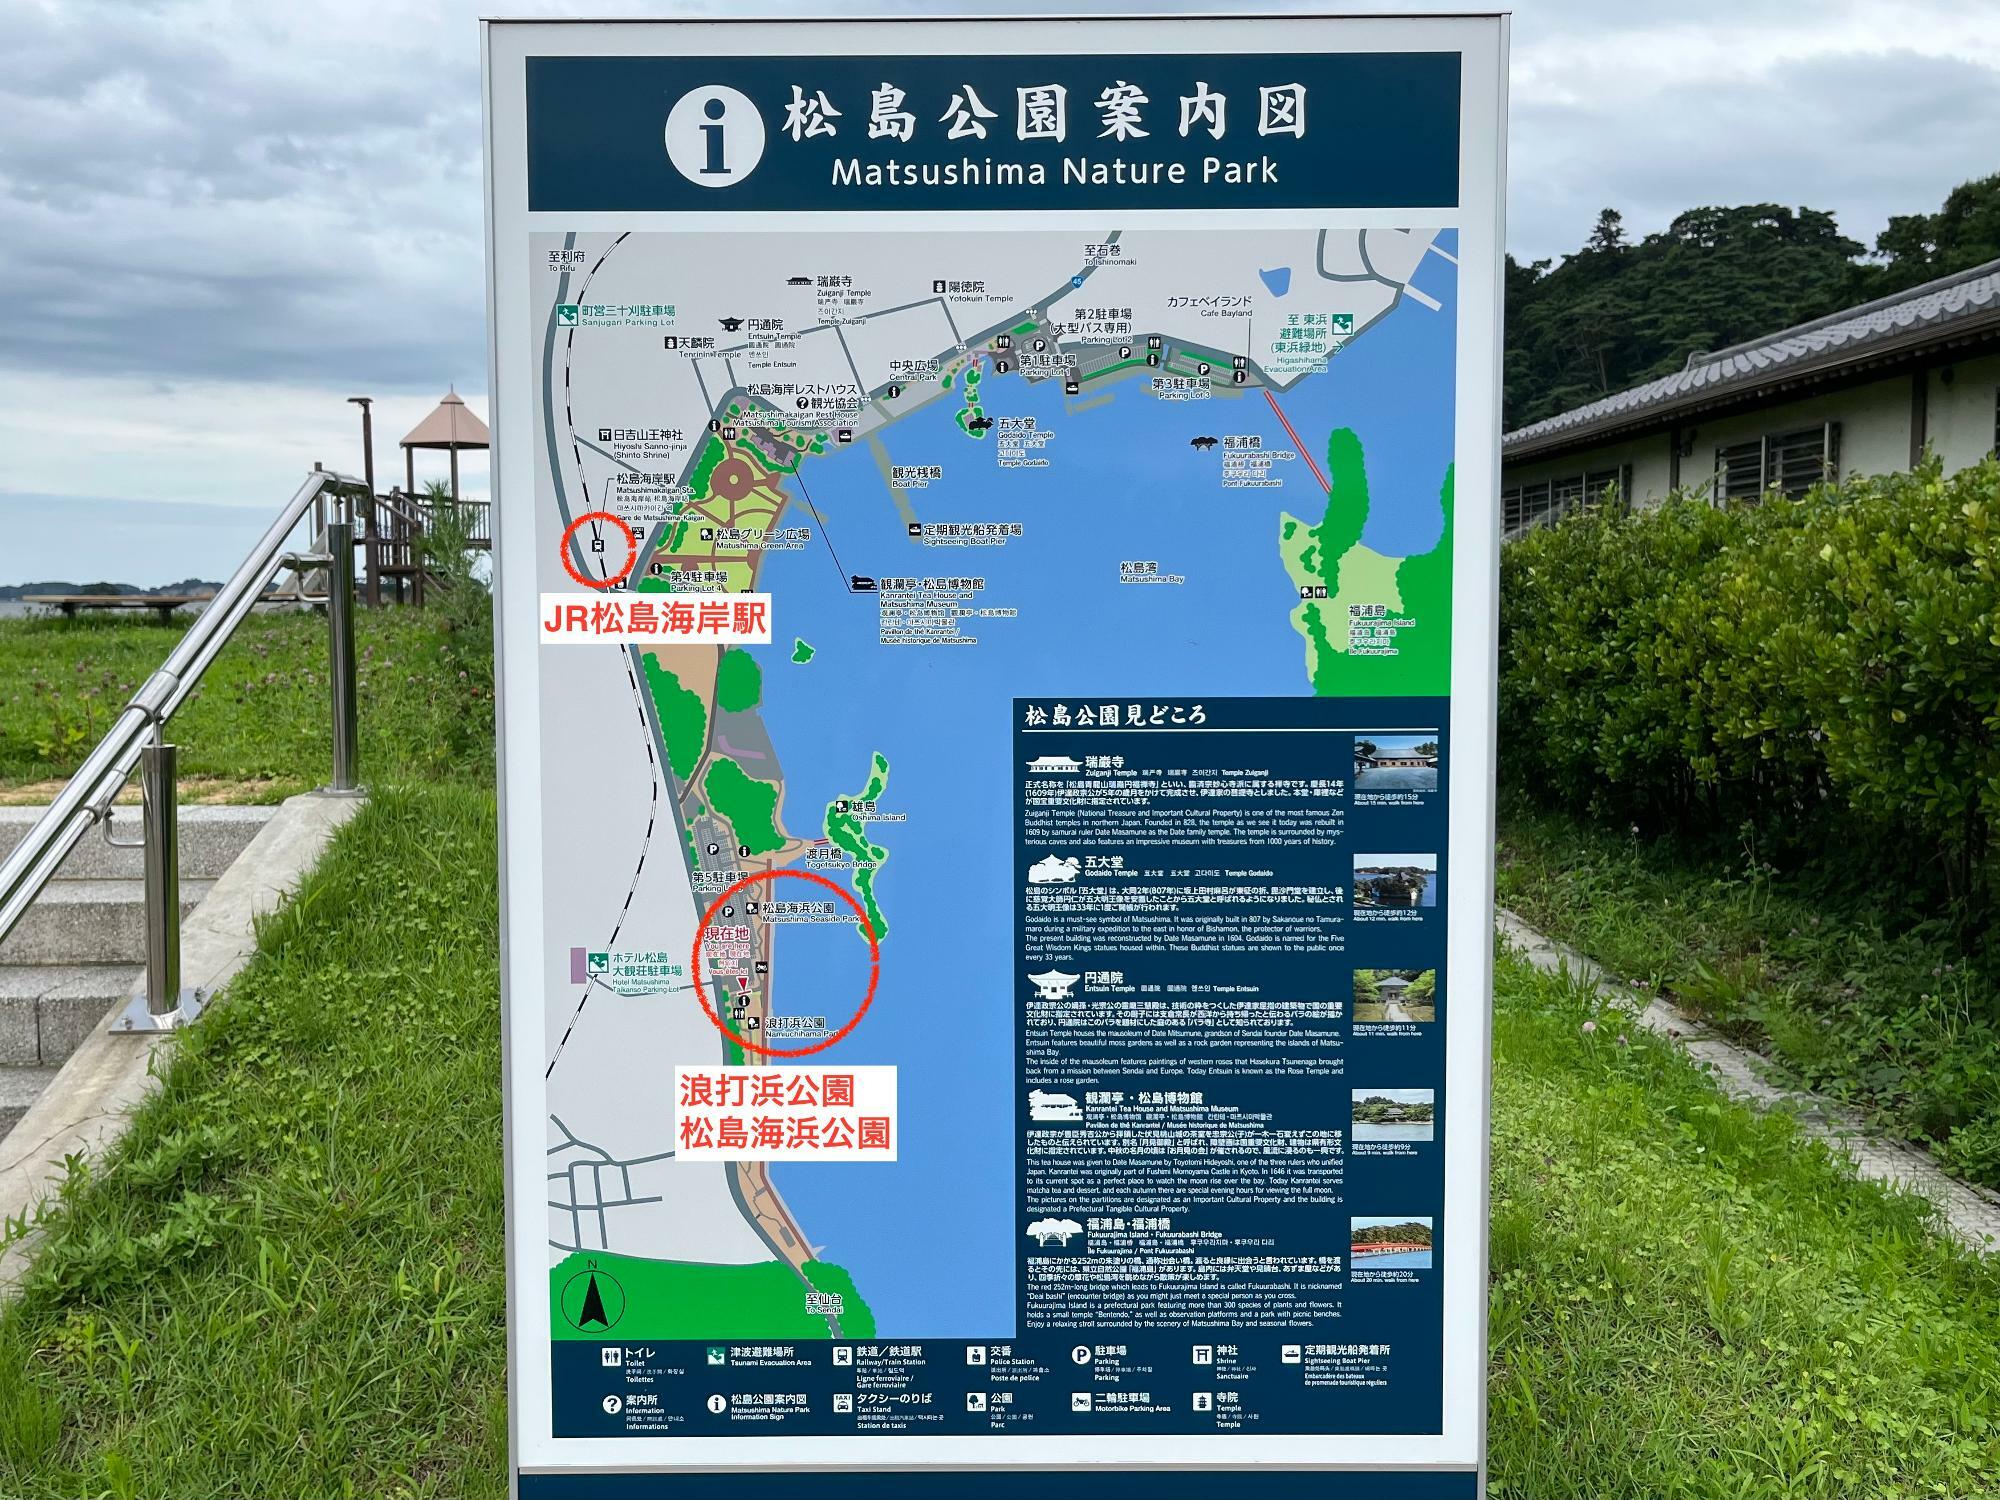 ▲ 「JR松島海岸駅」というと観光地のイメージだが、筆者を含め地元の人々がちょっと気分転換に気軽に行ける場所は多い